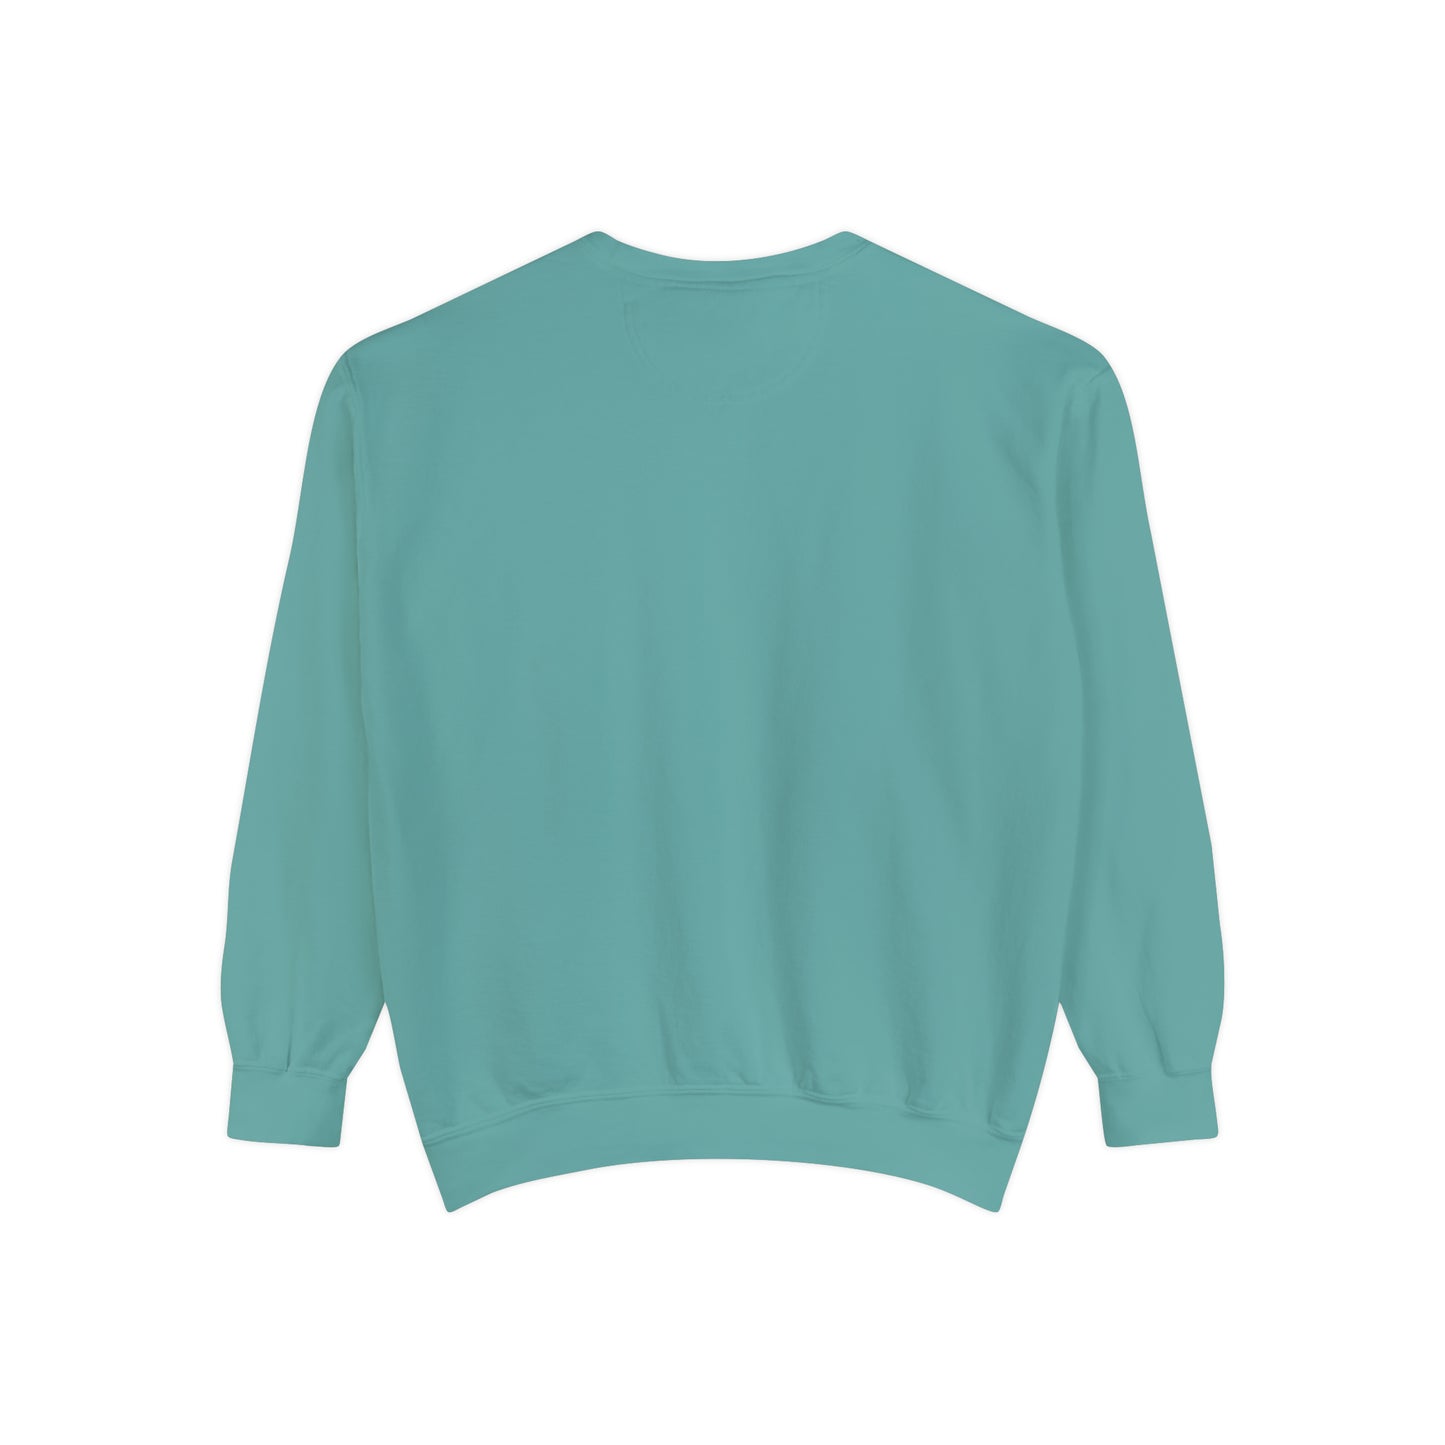 WCIS 1981 Champs Unisex Garment-Dyed Sweatshirt